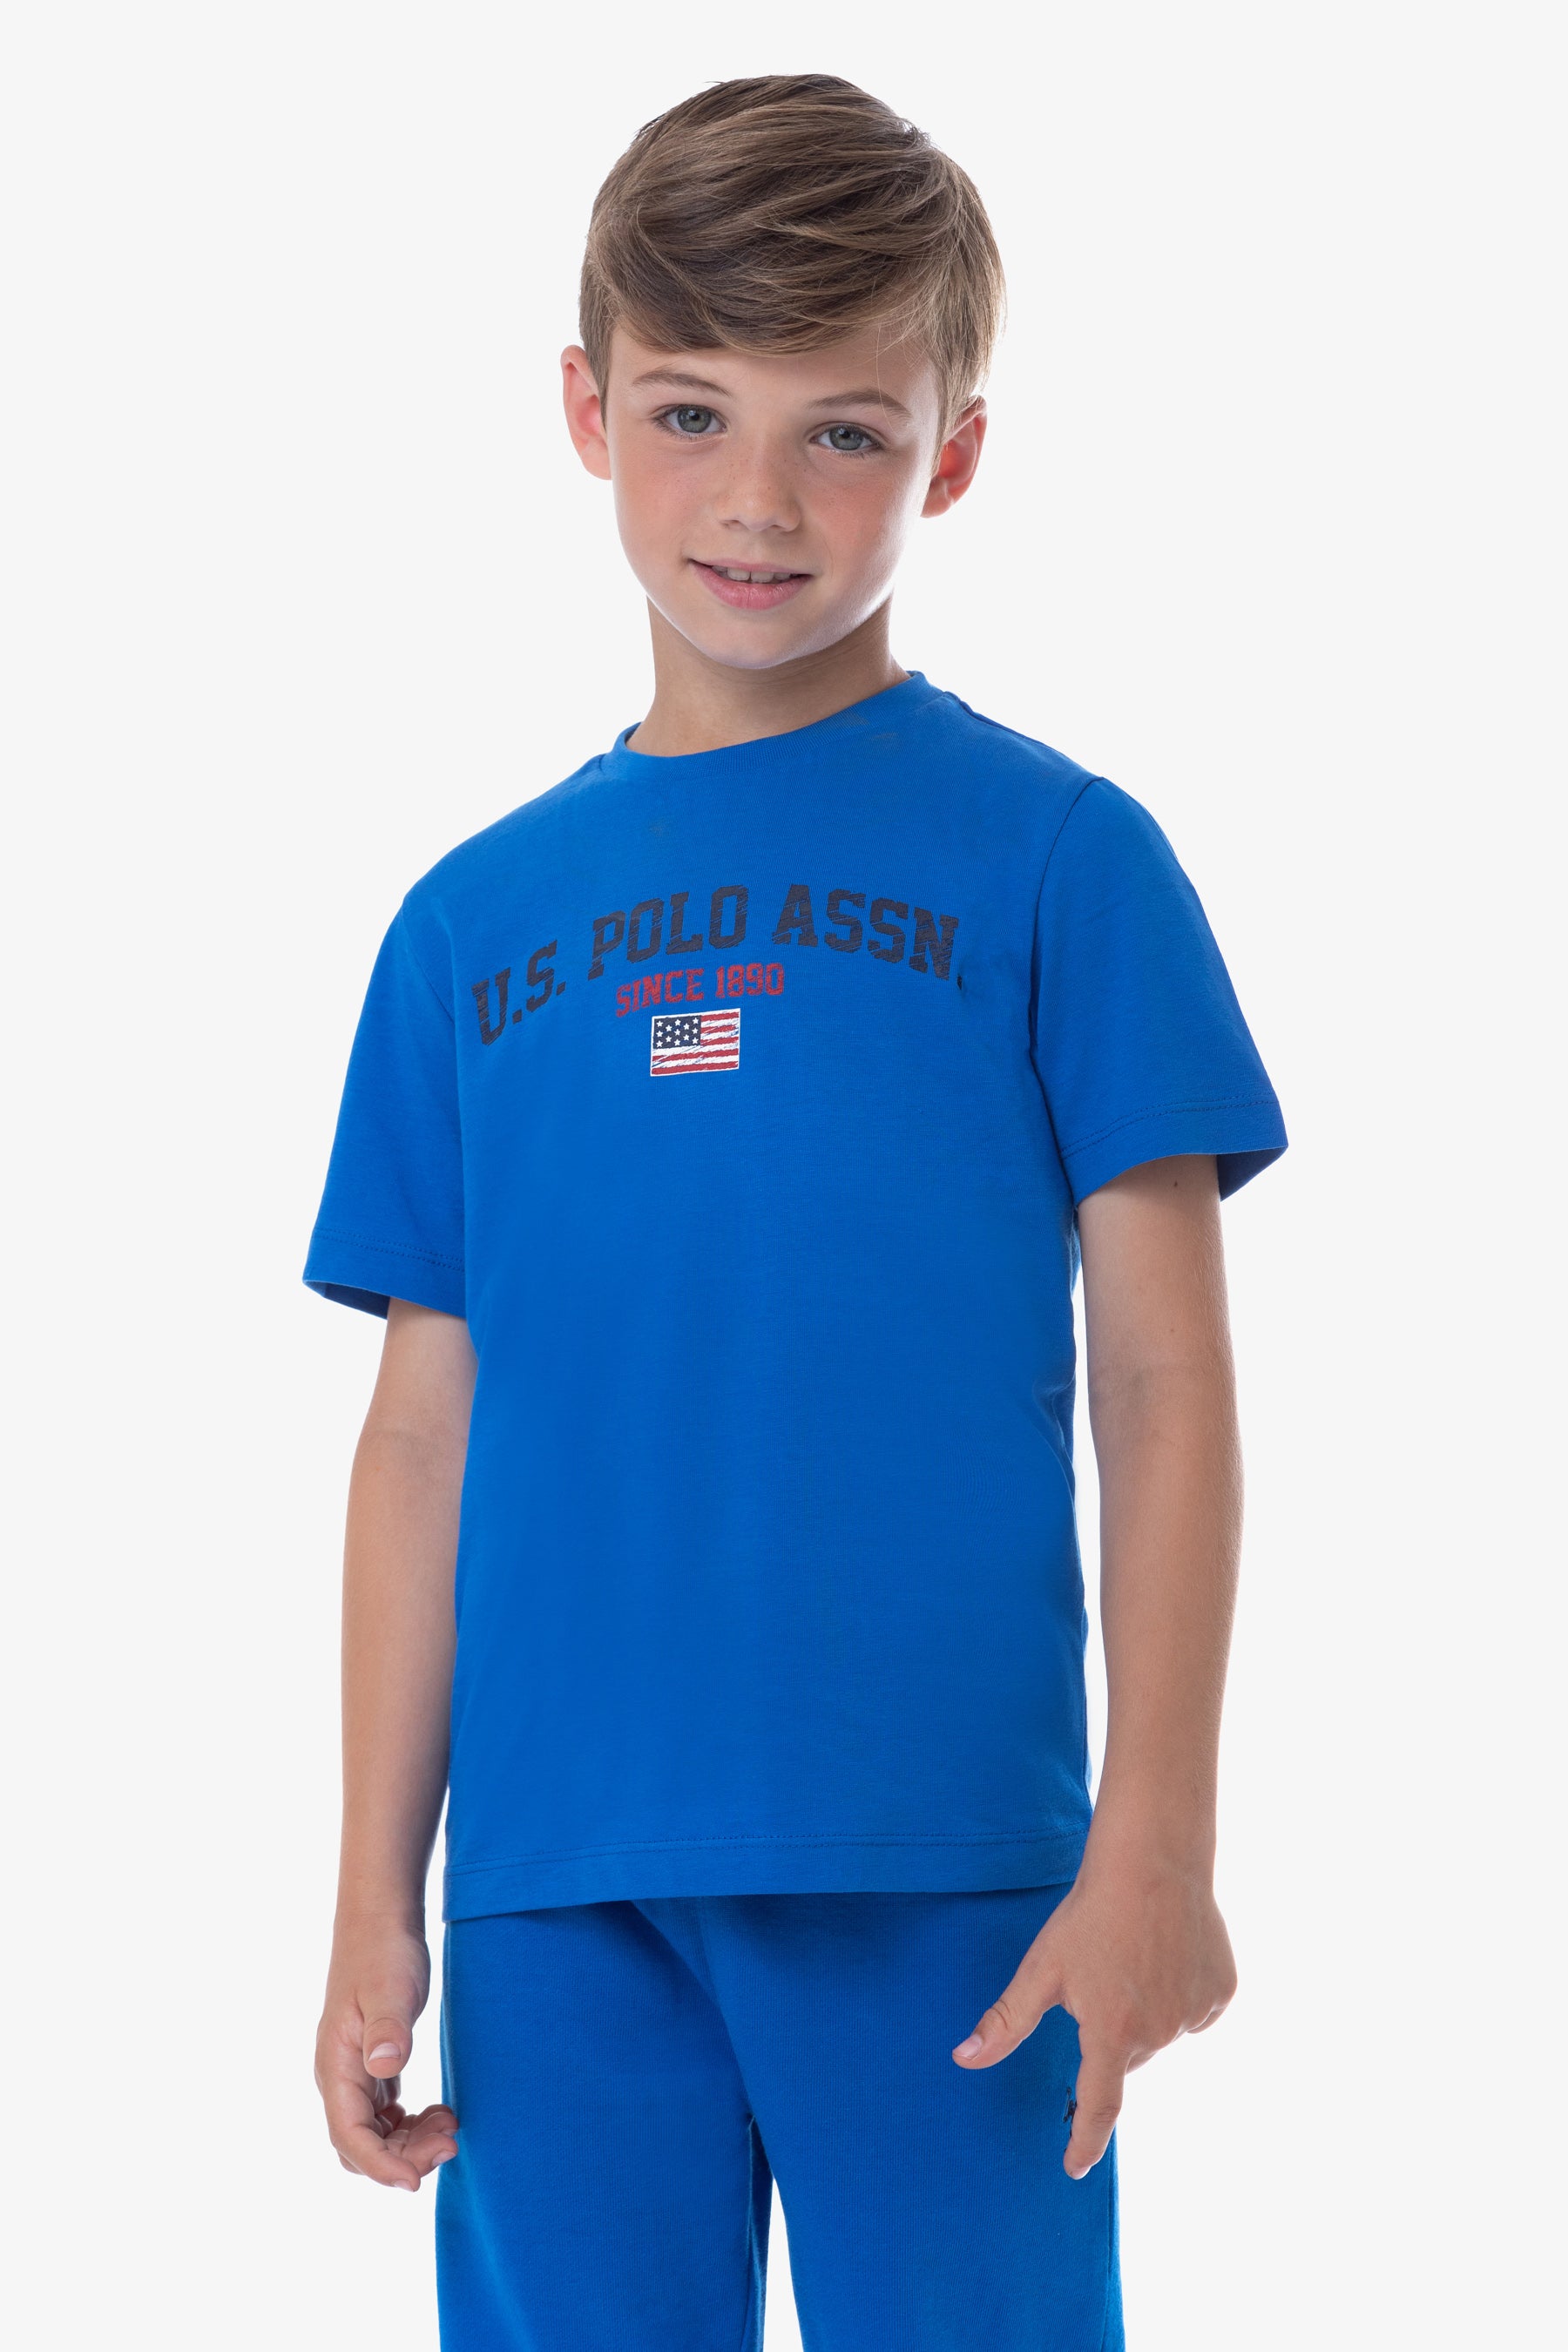 T-shirt a manica corta con scritta U.S. Polo Assn.